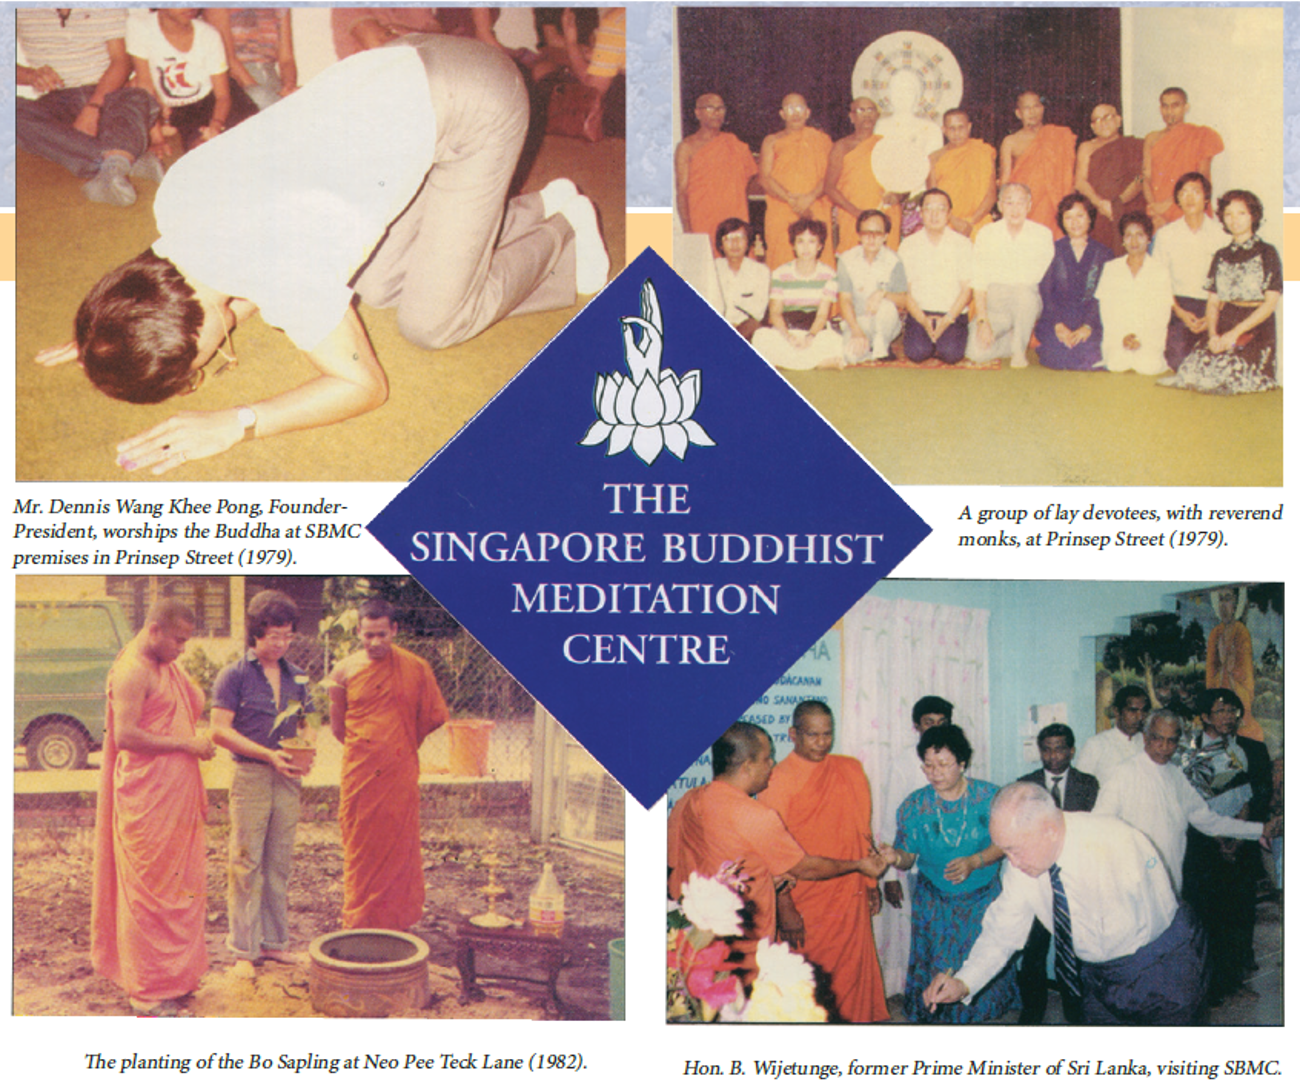 History of The Singapore Buddhist Meditation Center